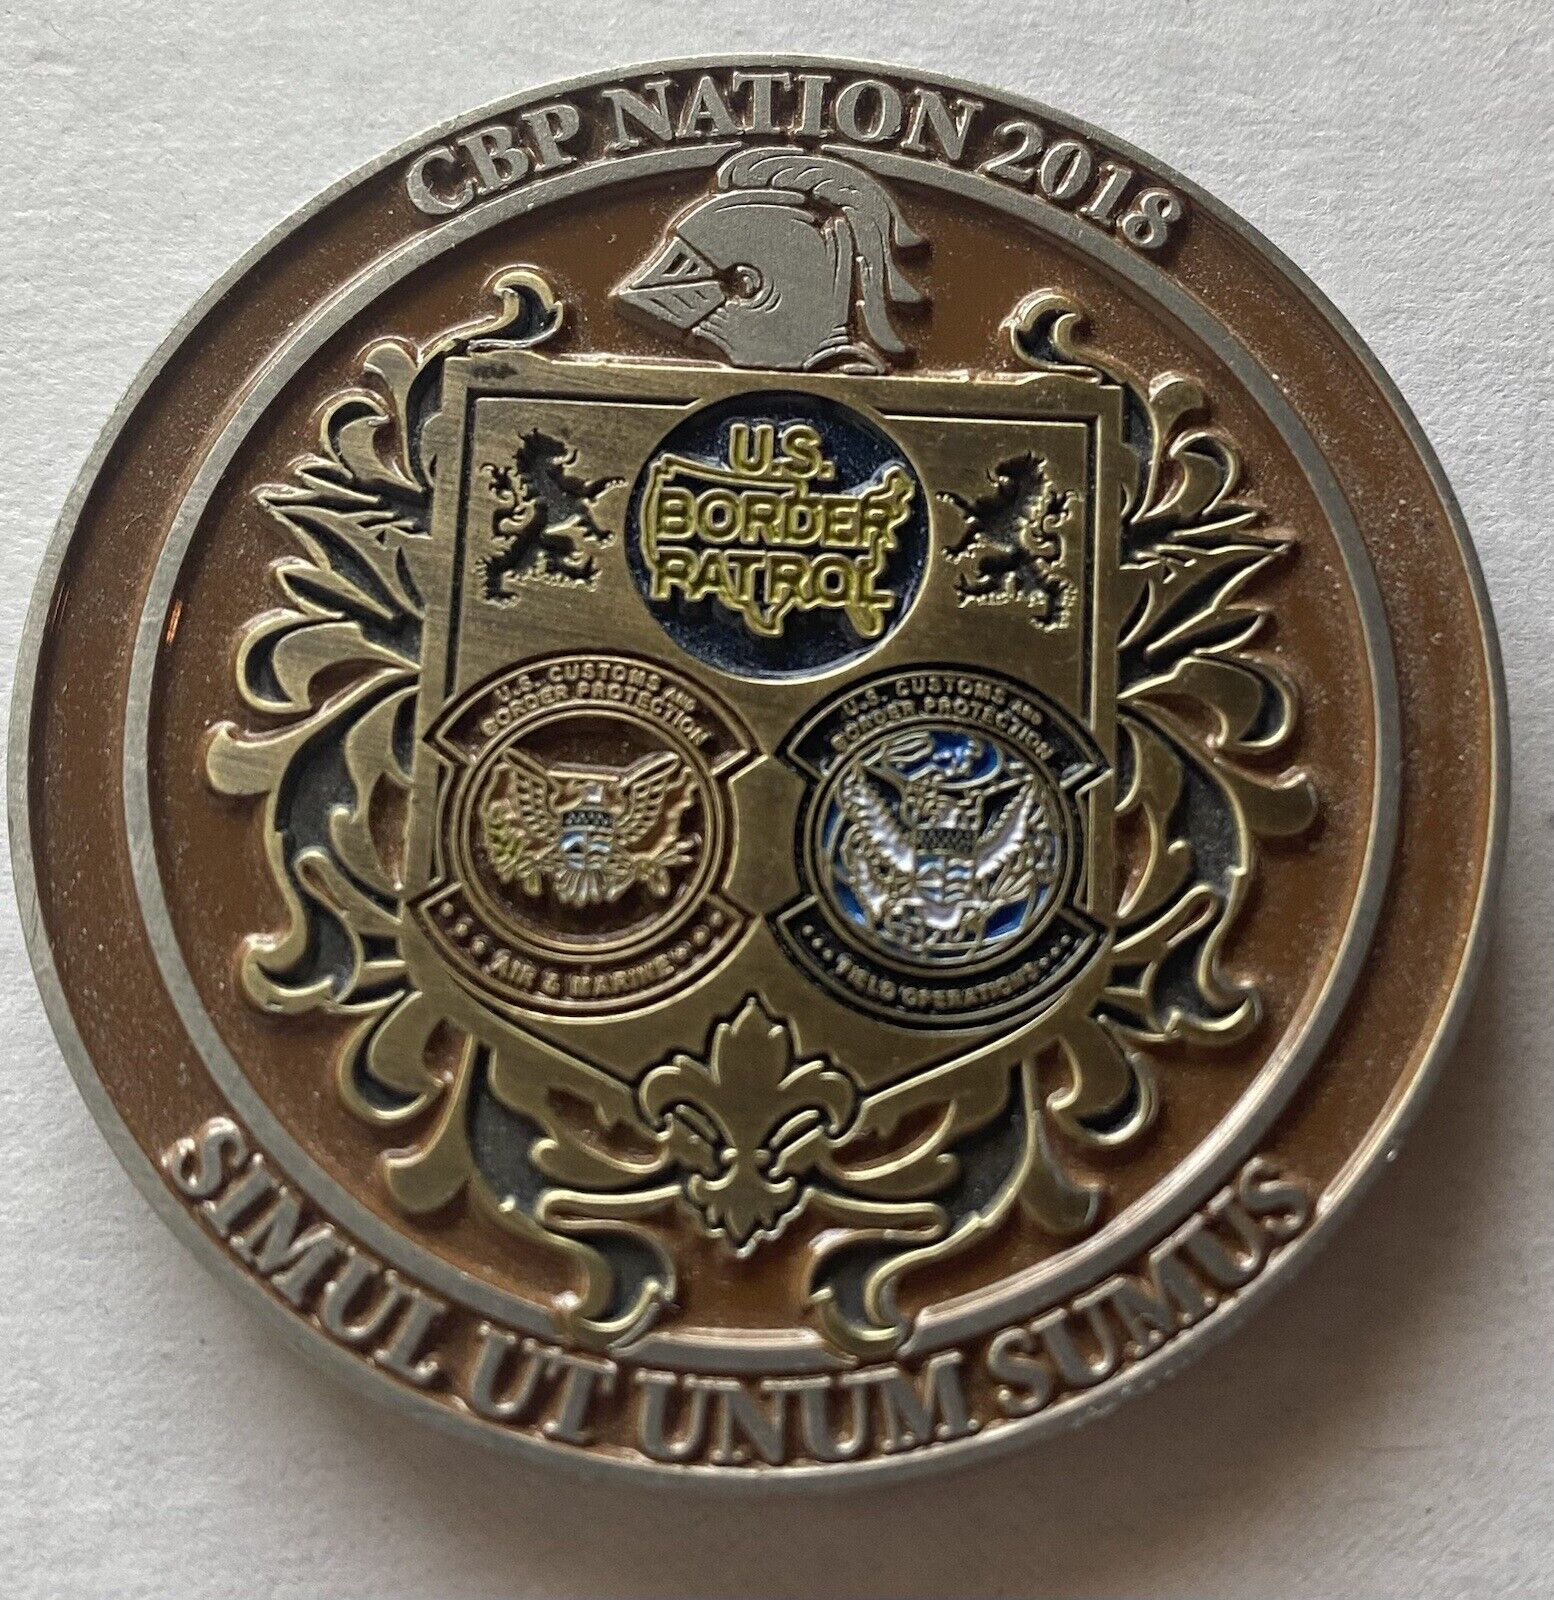 USCBP Air & Marine CBP Nation 2018 Limited Rare CBP Challenge Coin